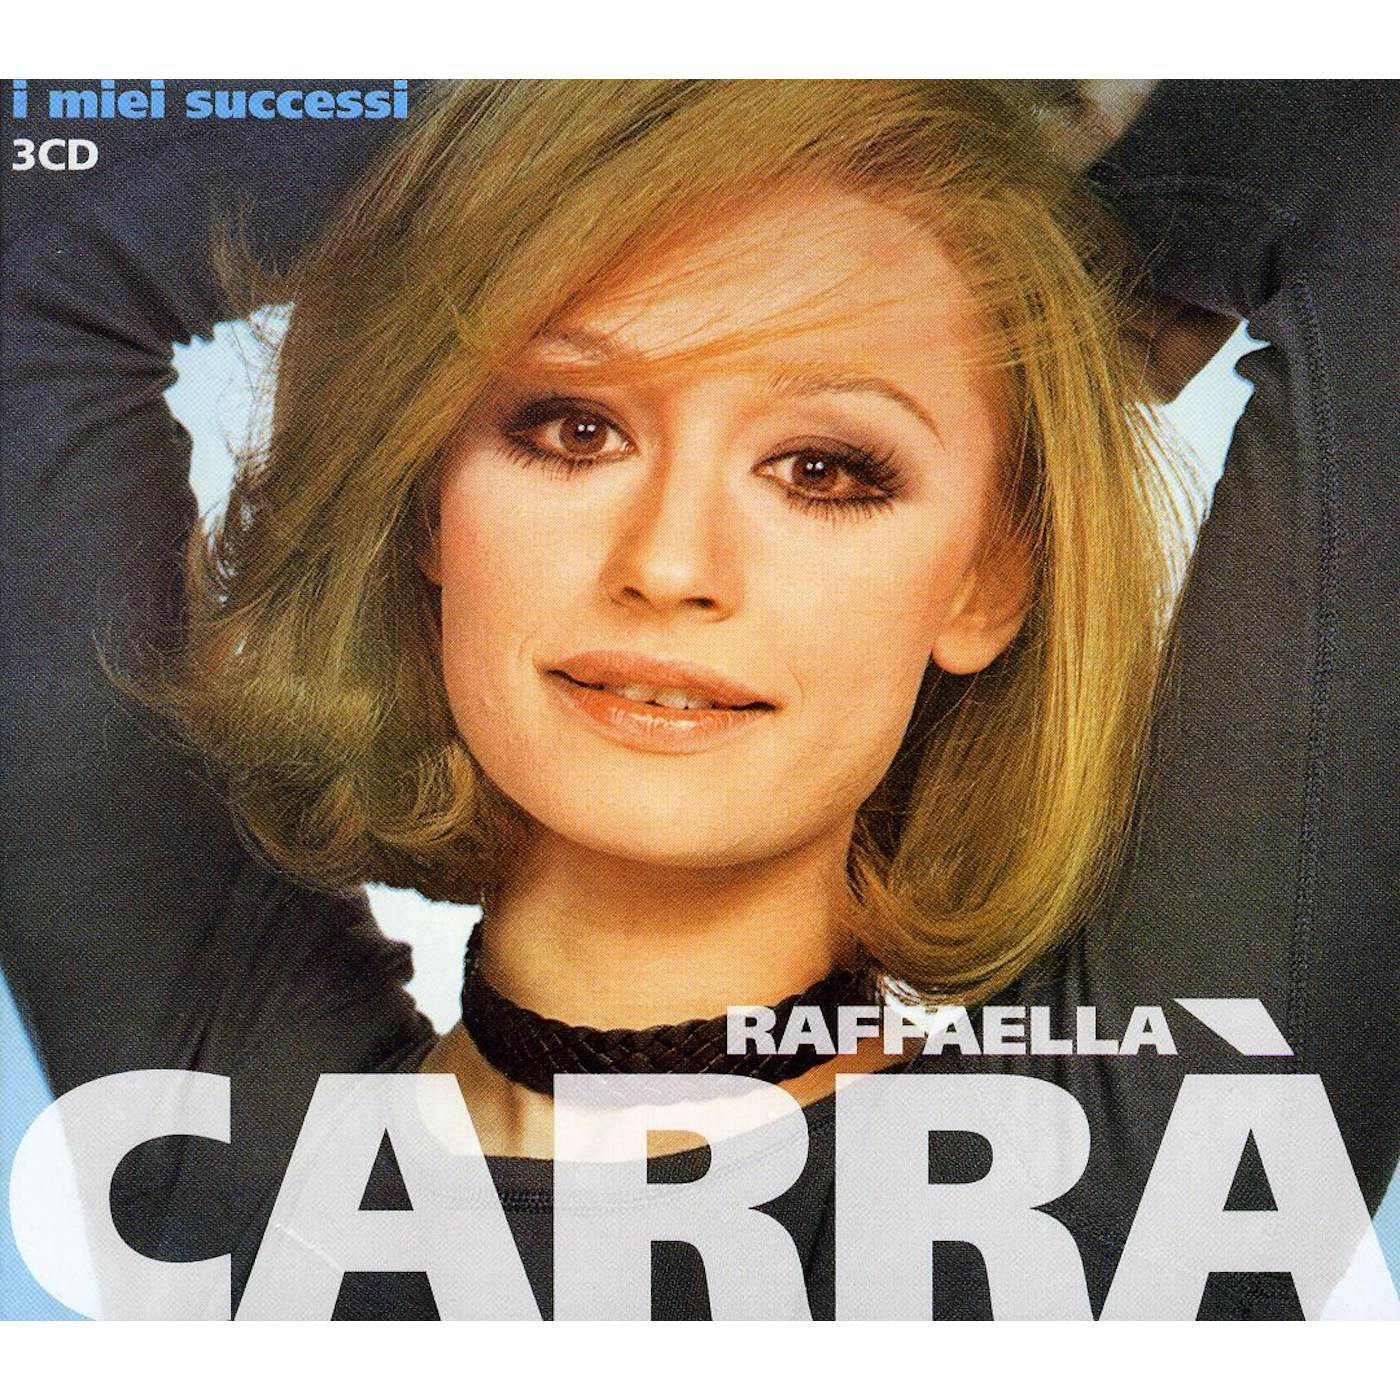 Raffaella Carrà I MIEI SUCCESSI CD